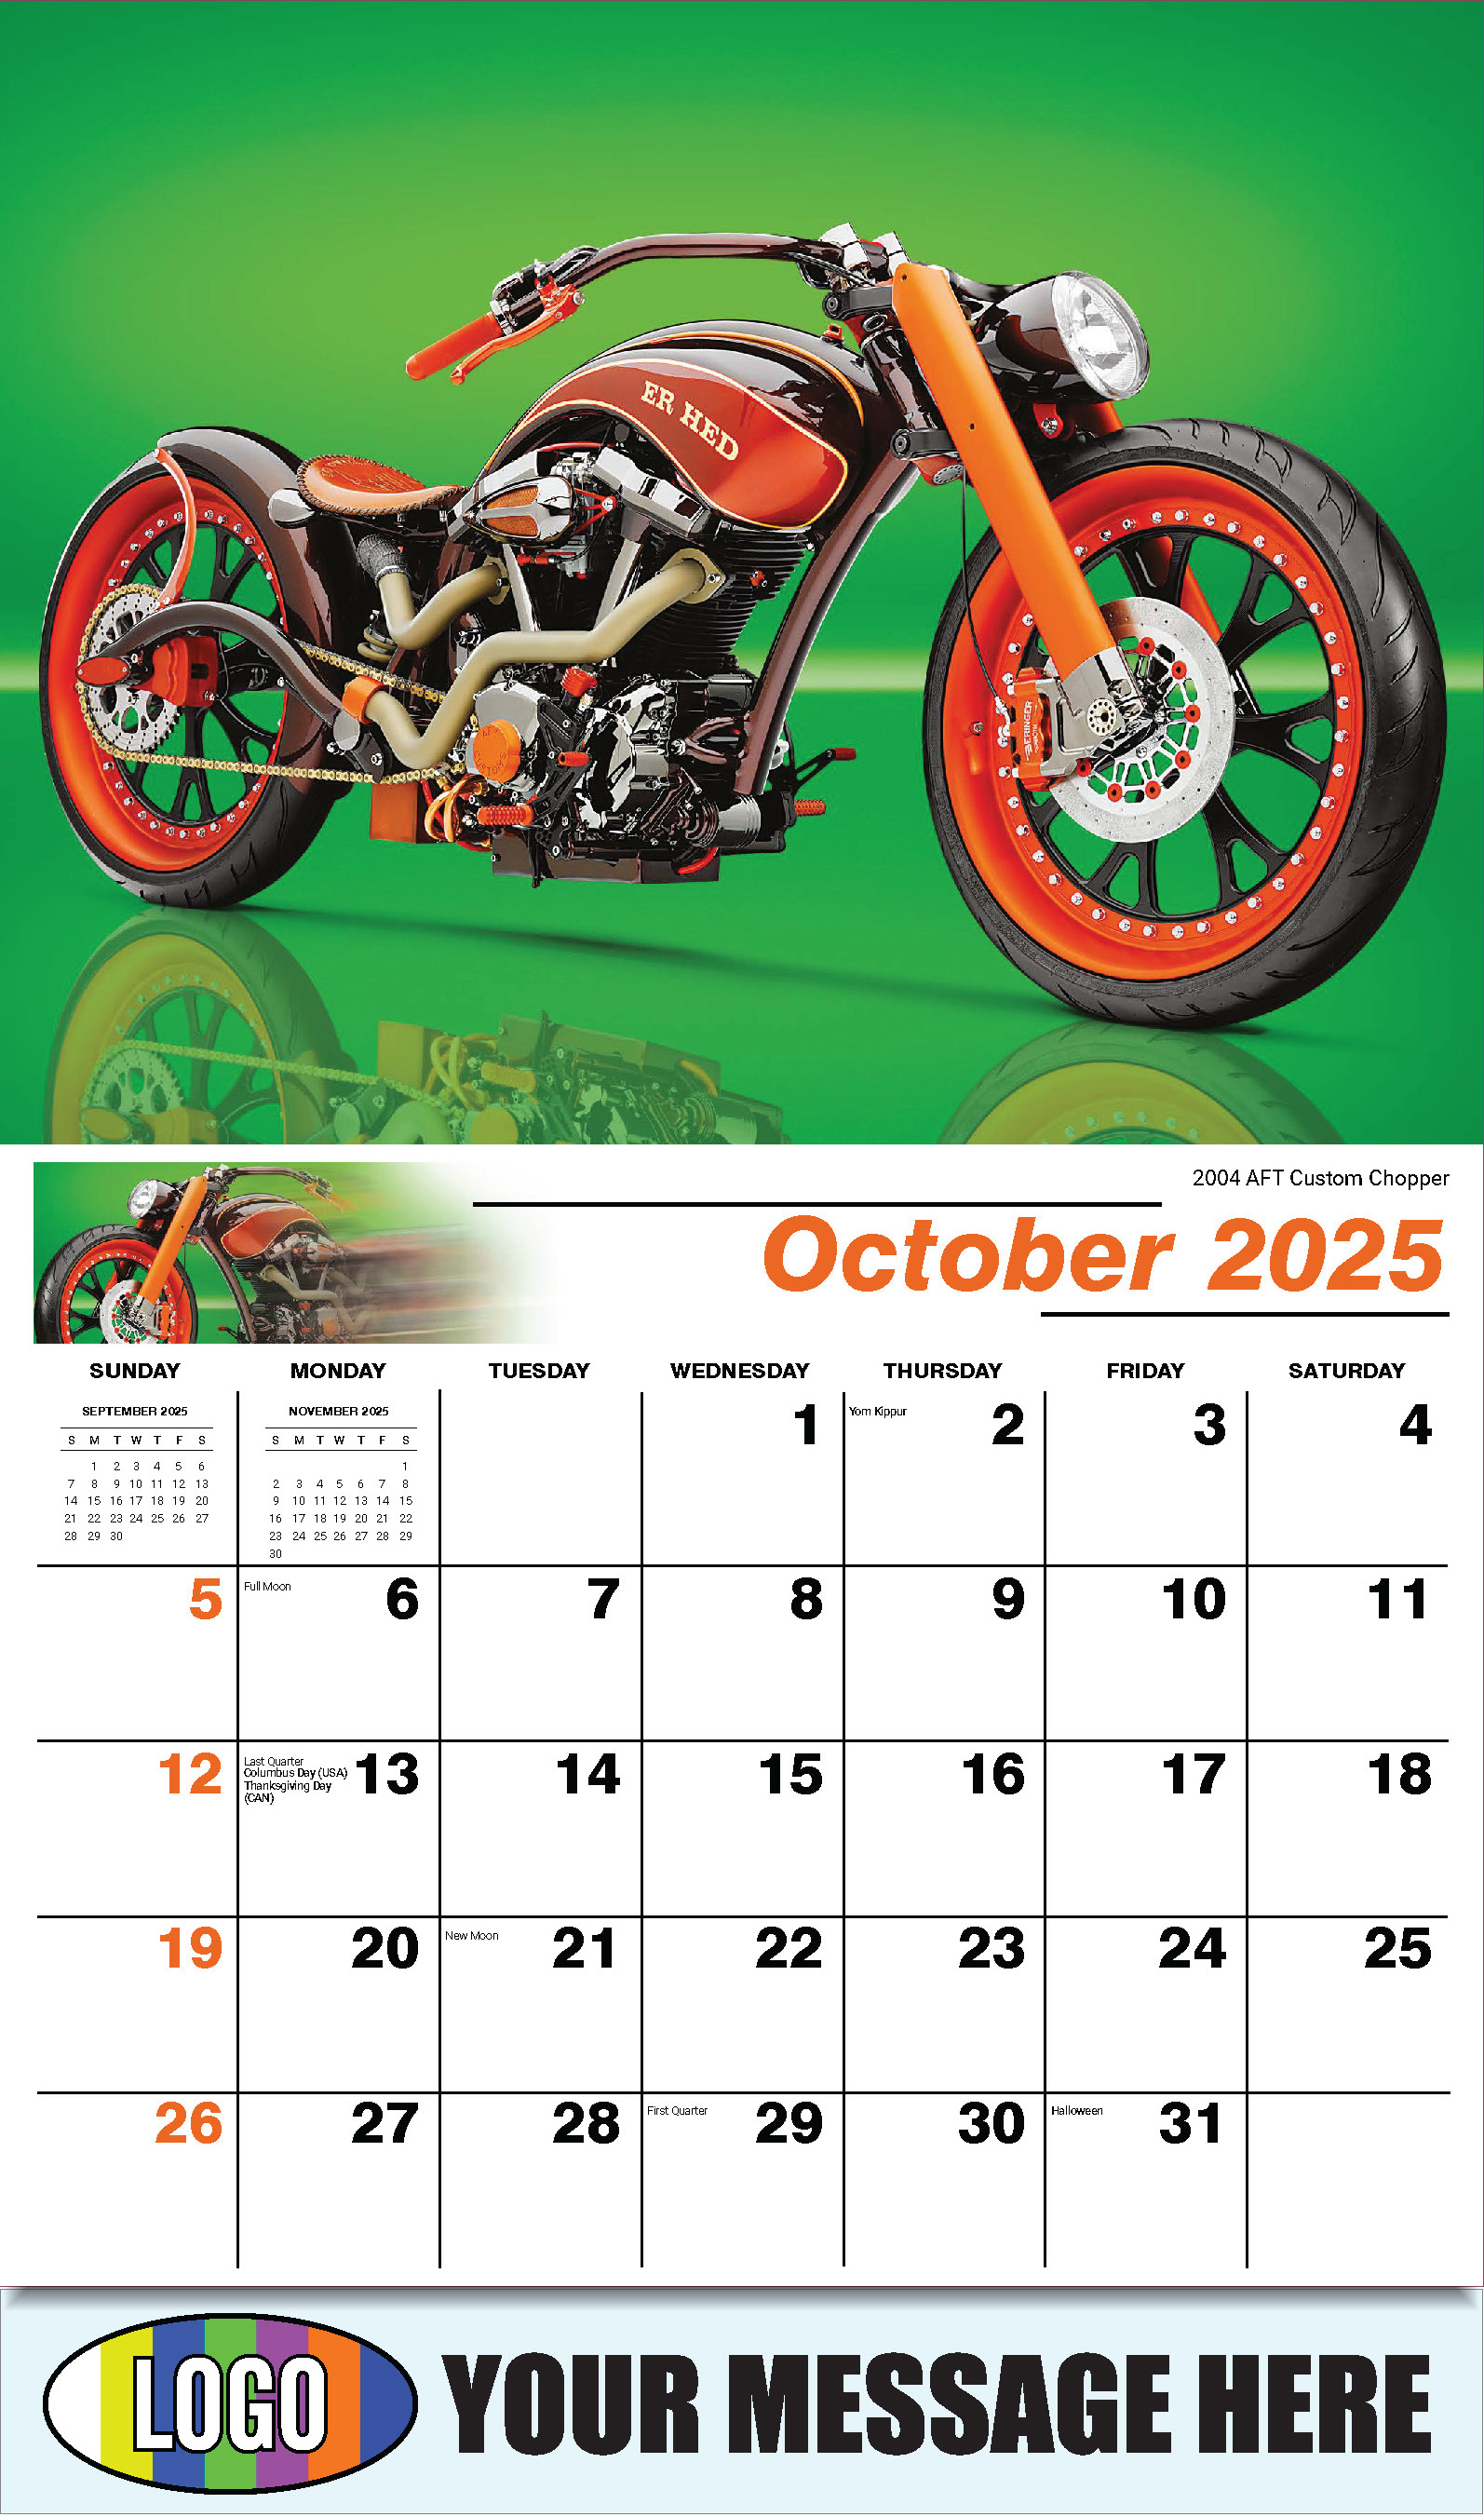 Motorcycle Mania 2025 Automotve Business Advertising Wall Calendar - October